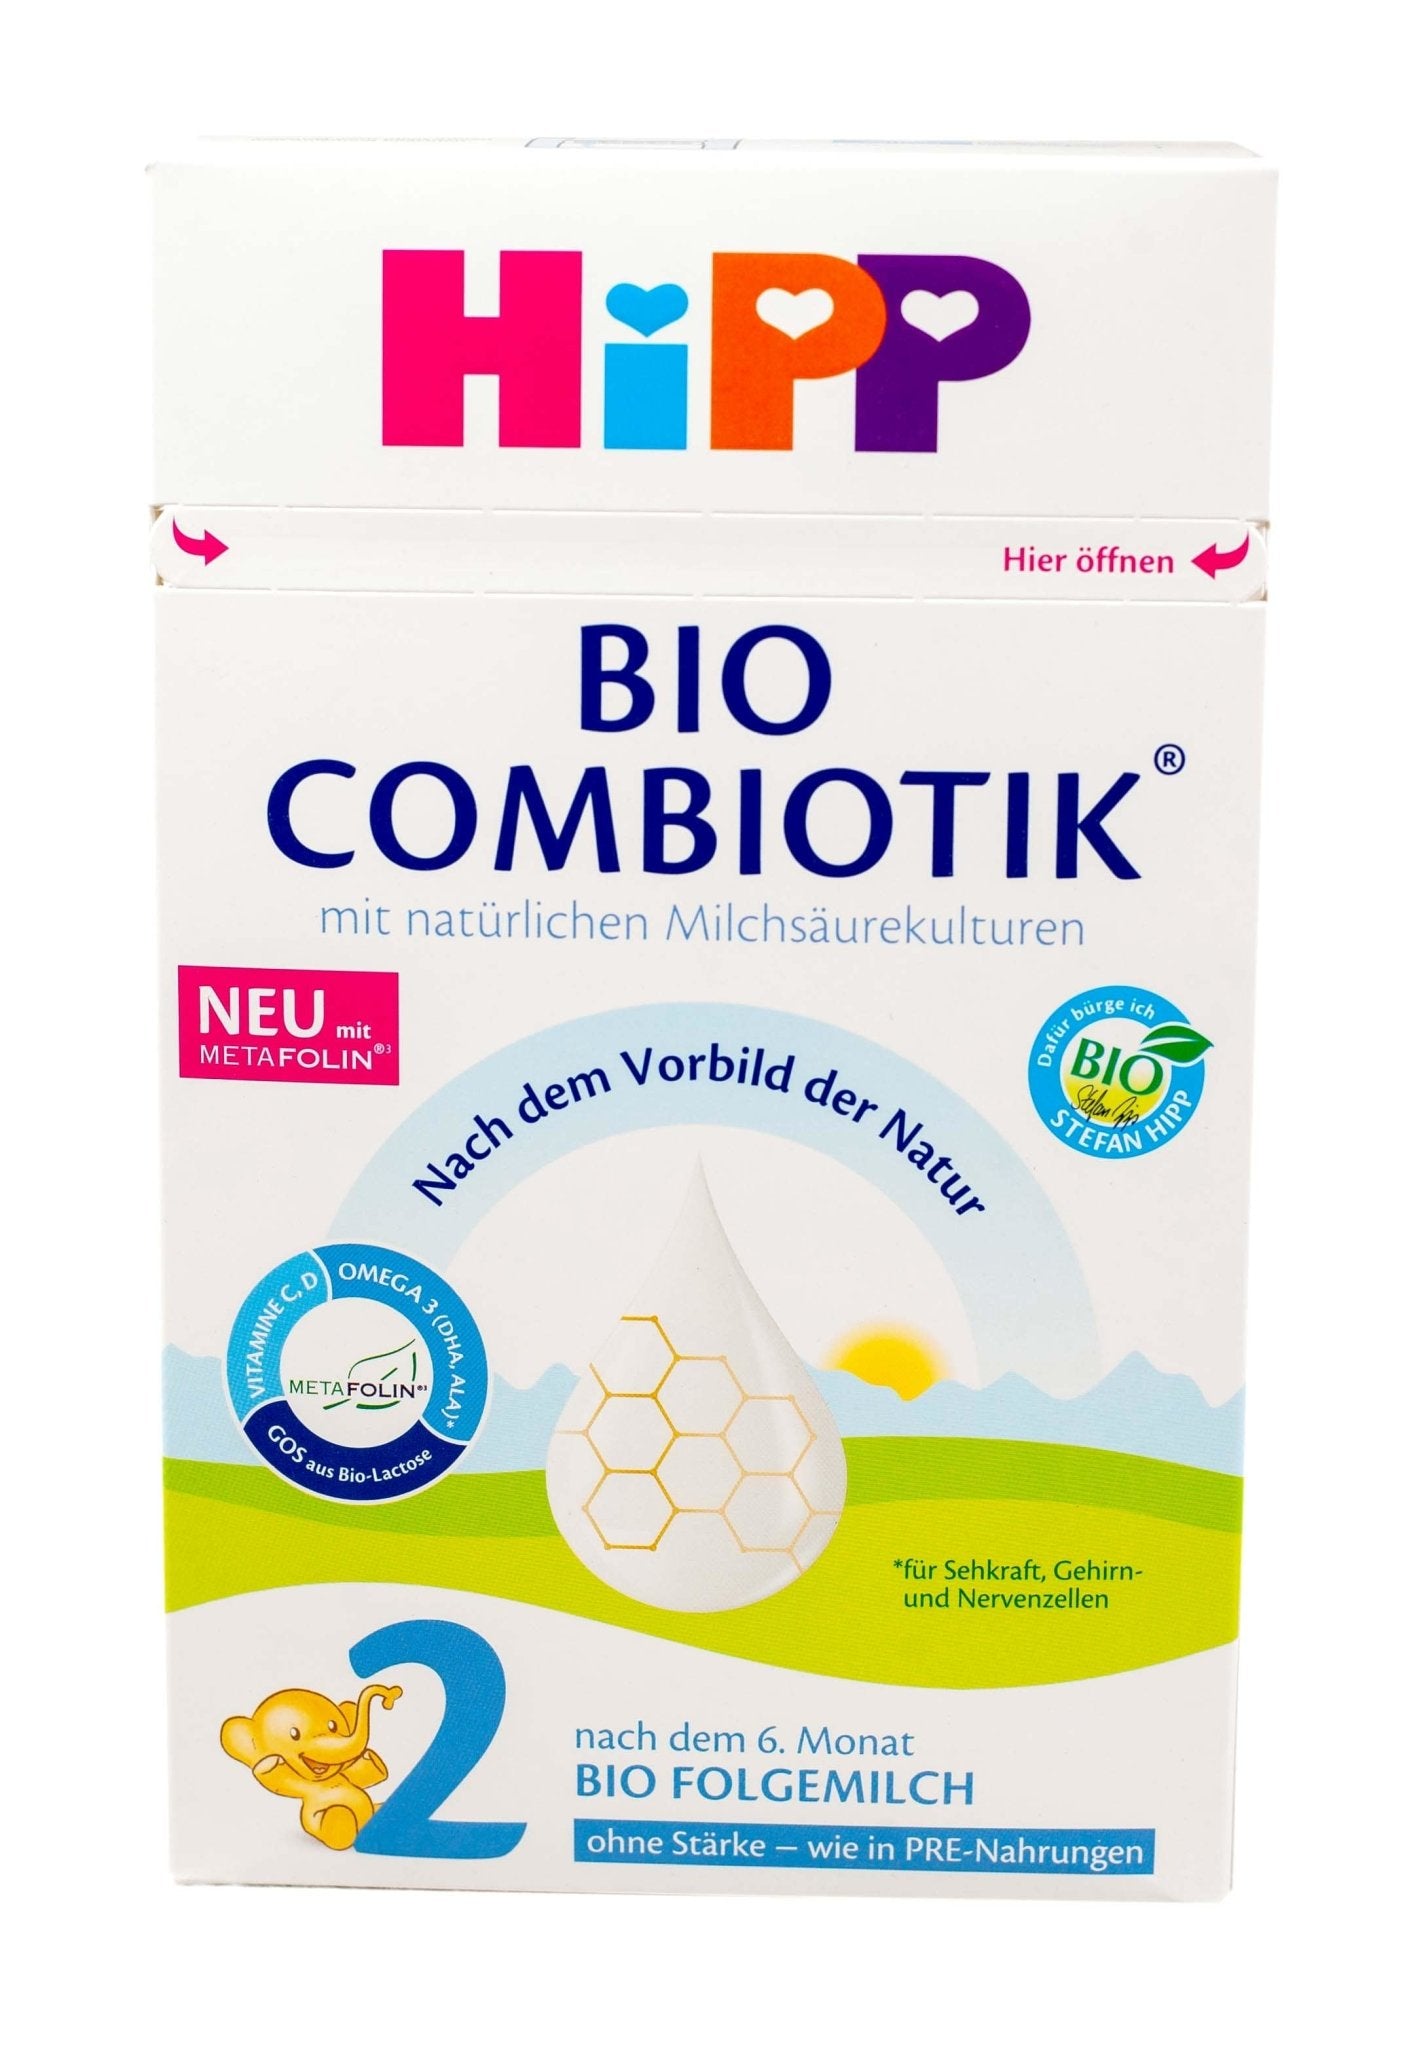 HiPP HA Combiotic Stage 2 Infant Formula